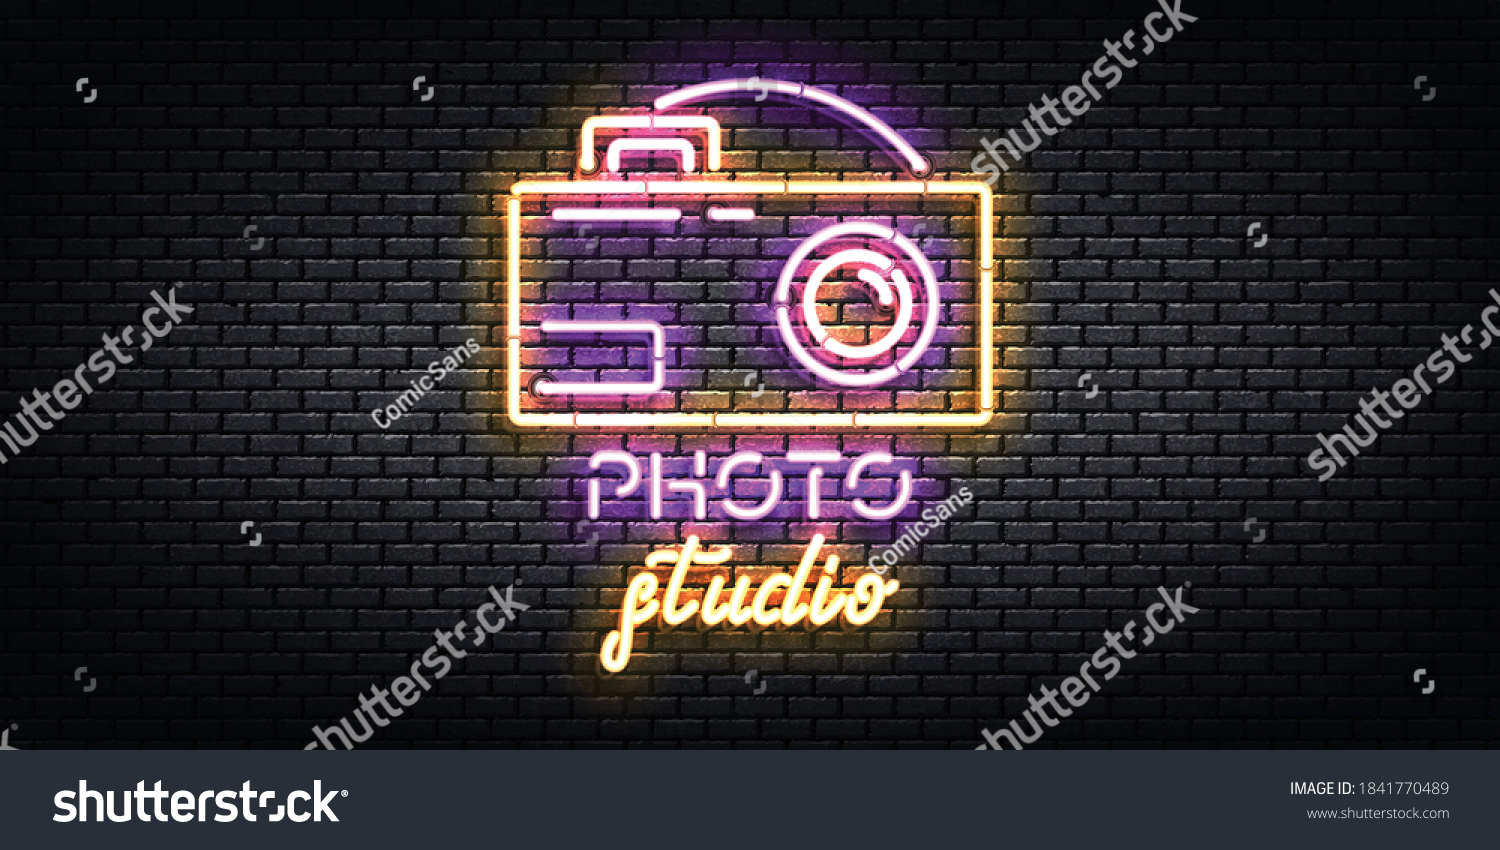 Time break down Philadelphia 15,529 Photographer Banner Images, Stock Photos & Vectors | Shutterstock